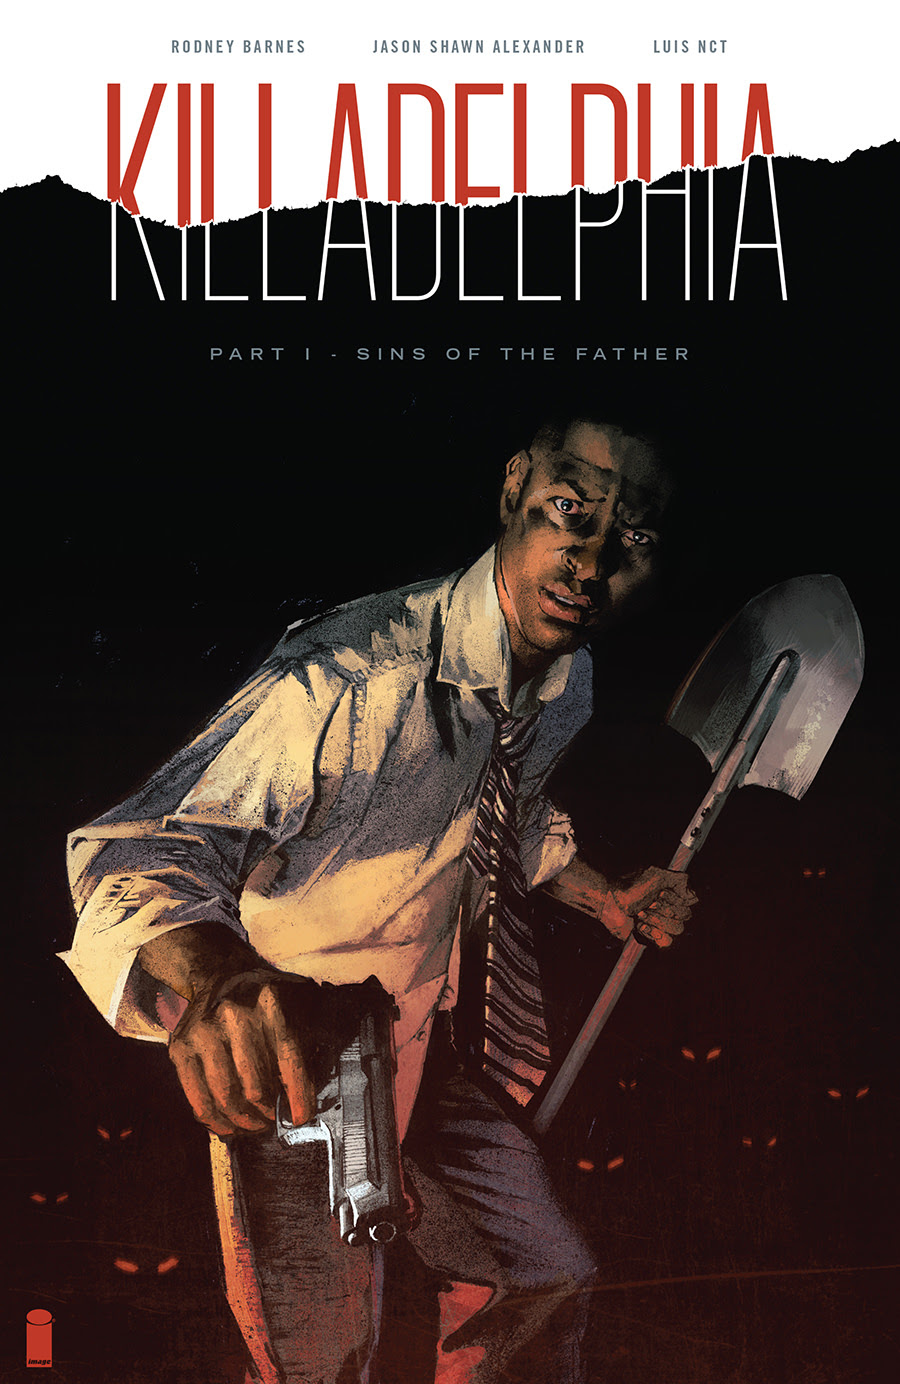 Chris Rock Calls Jason Shawn Alexander Killadelphia "the Best Graphic Novel I've Ever Read", Jordan Peele Calls it "a Classic"